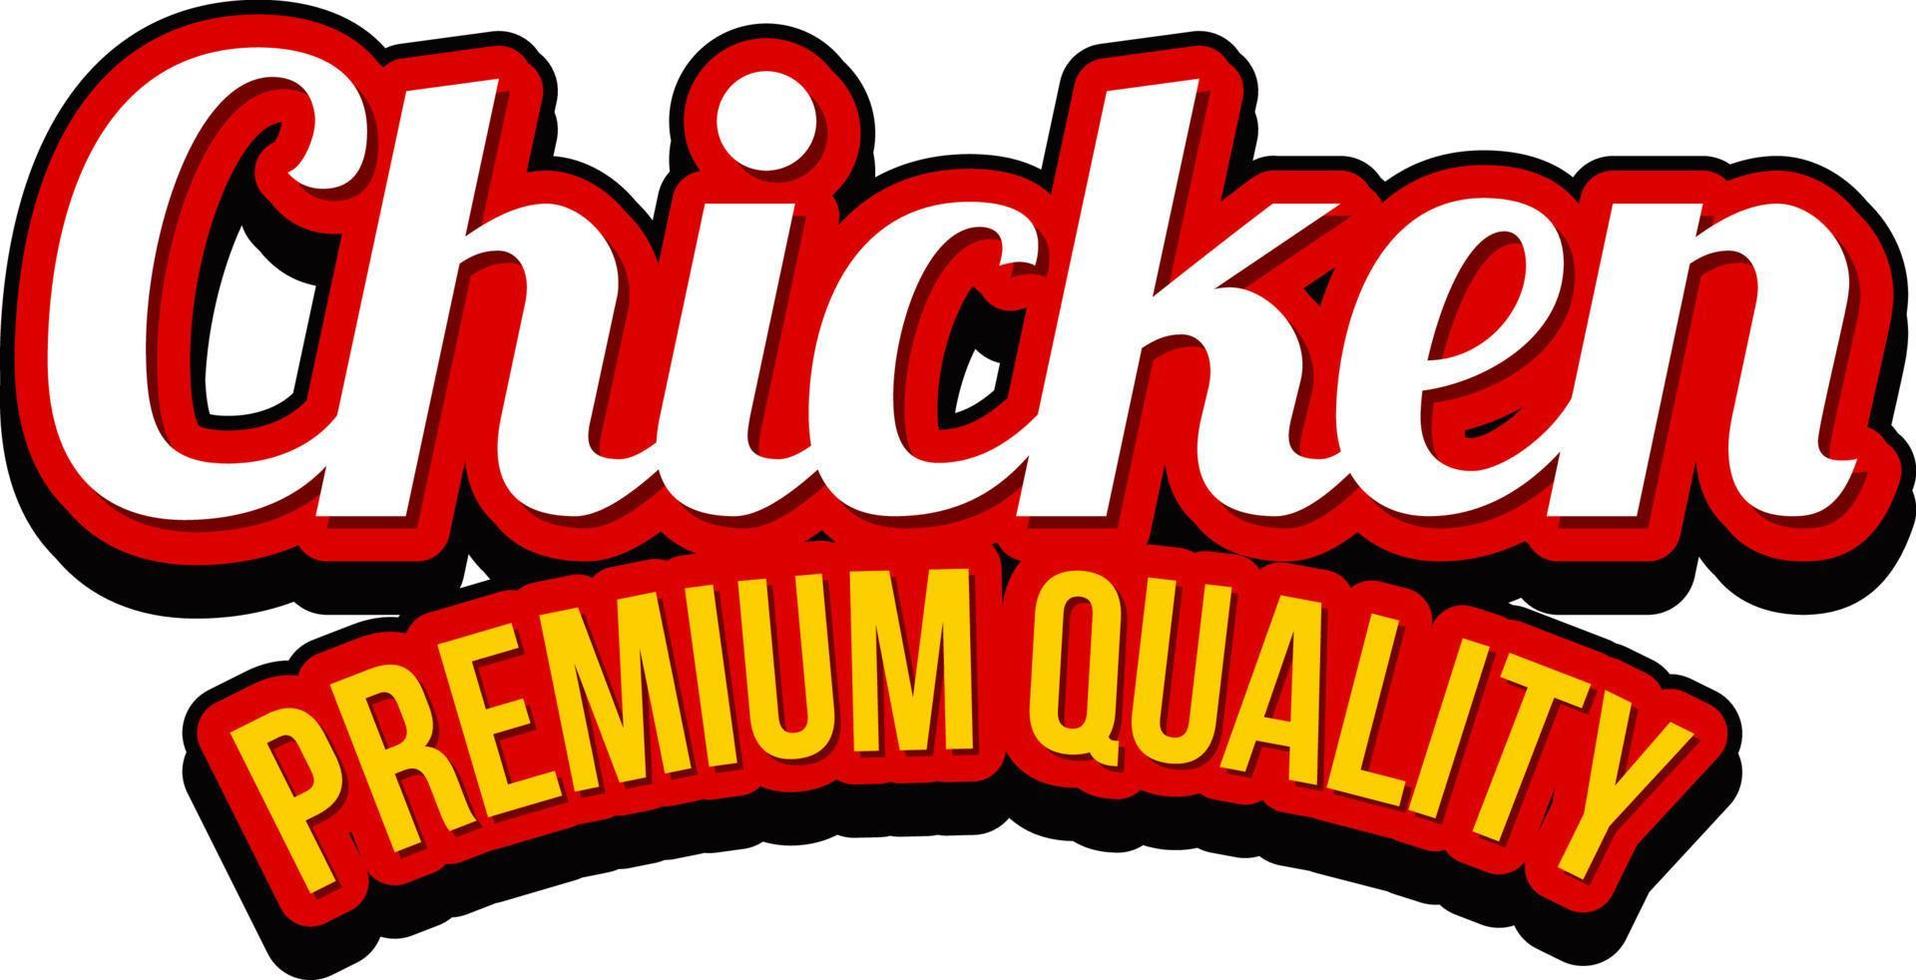 Chicken Premium Quality word logo vector